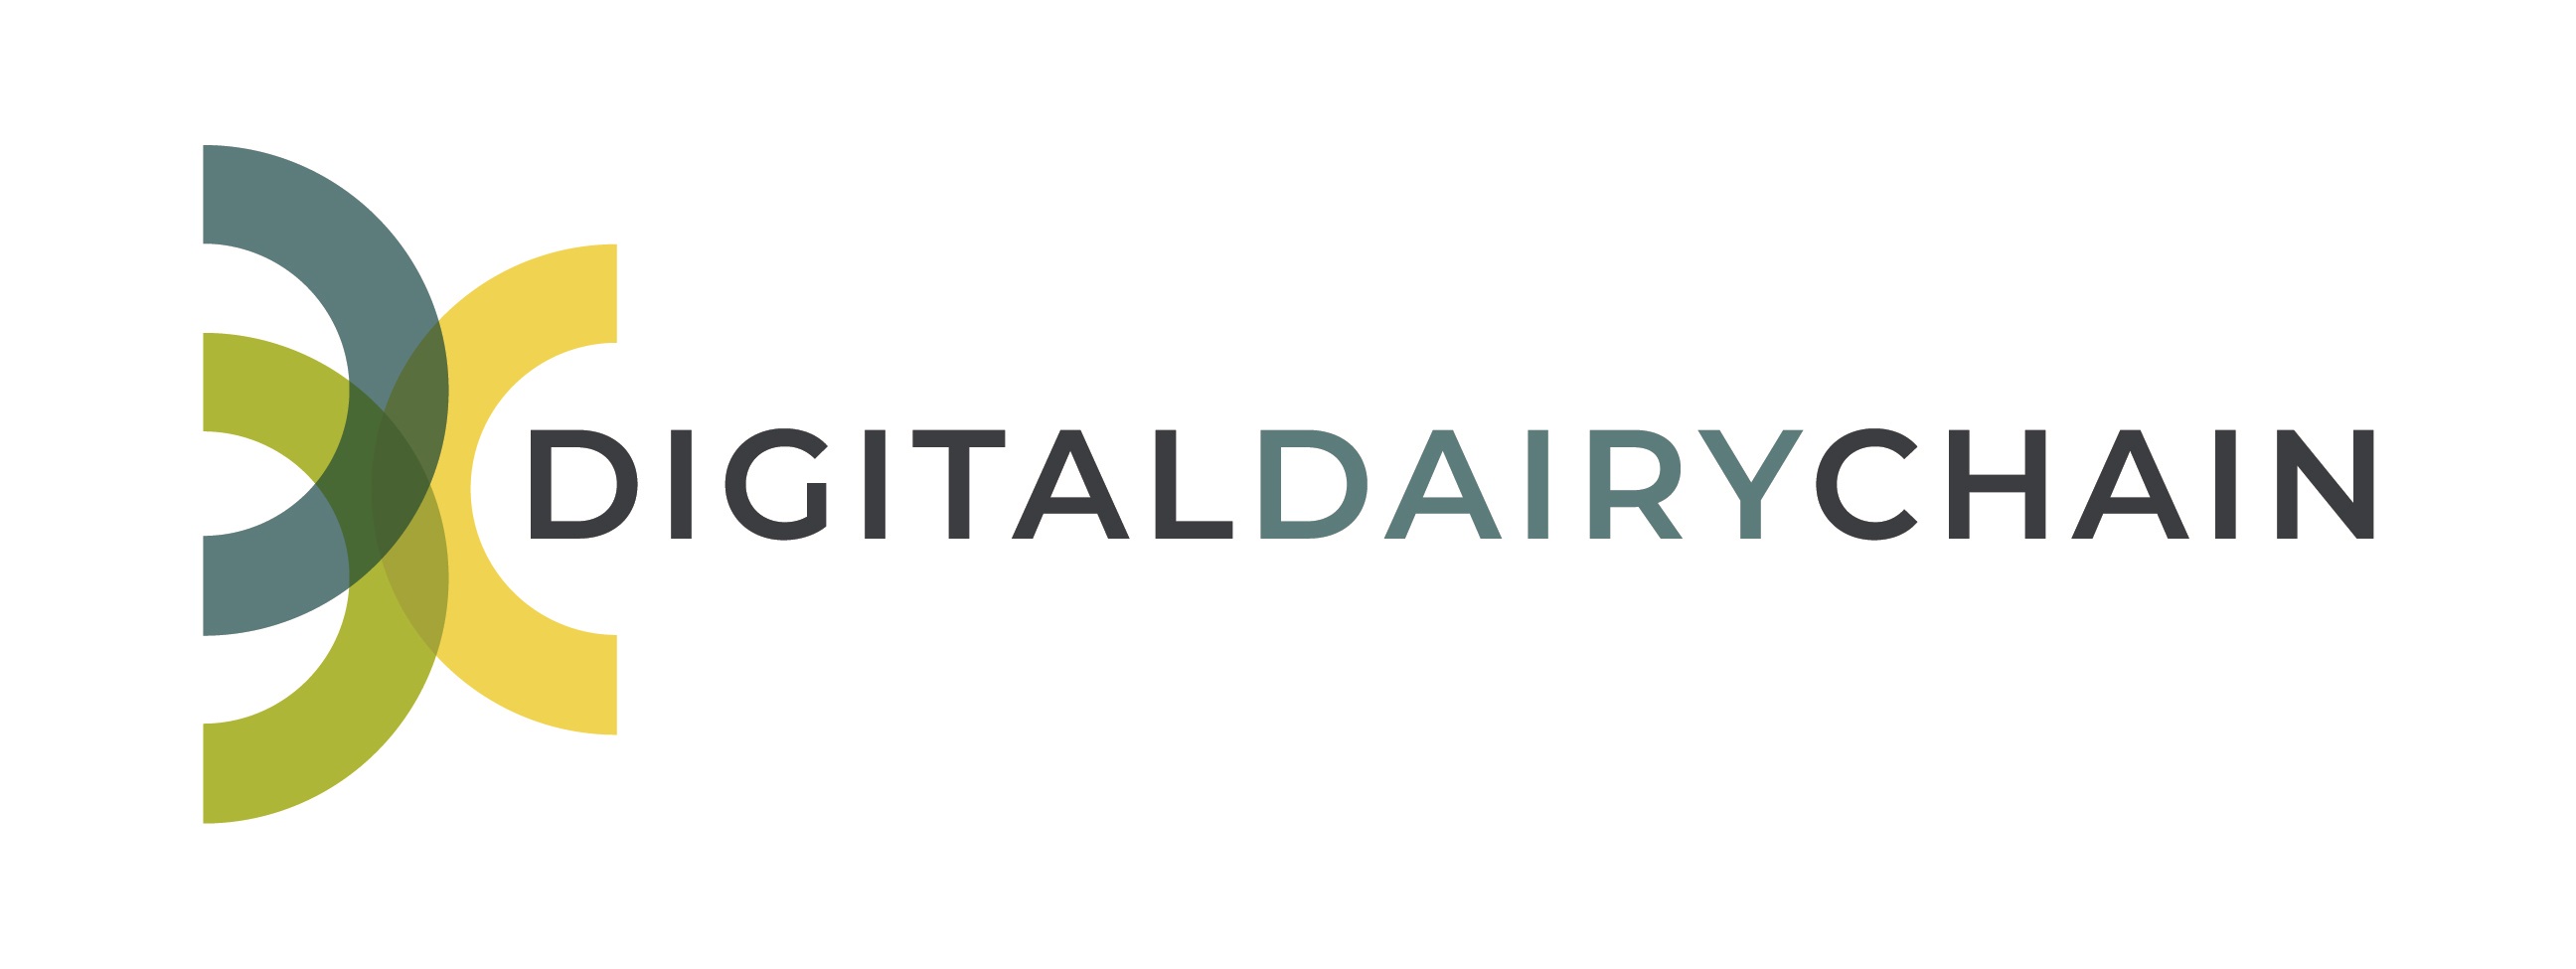 Digital Dairy Chain Logo